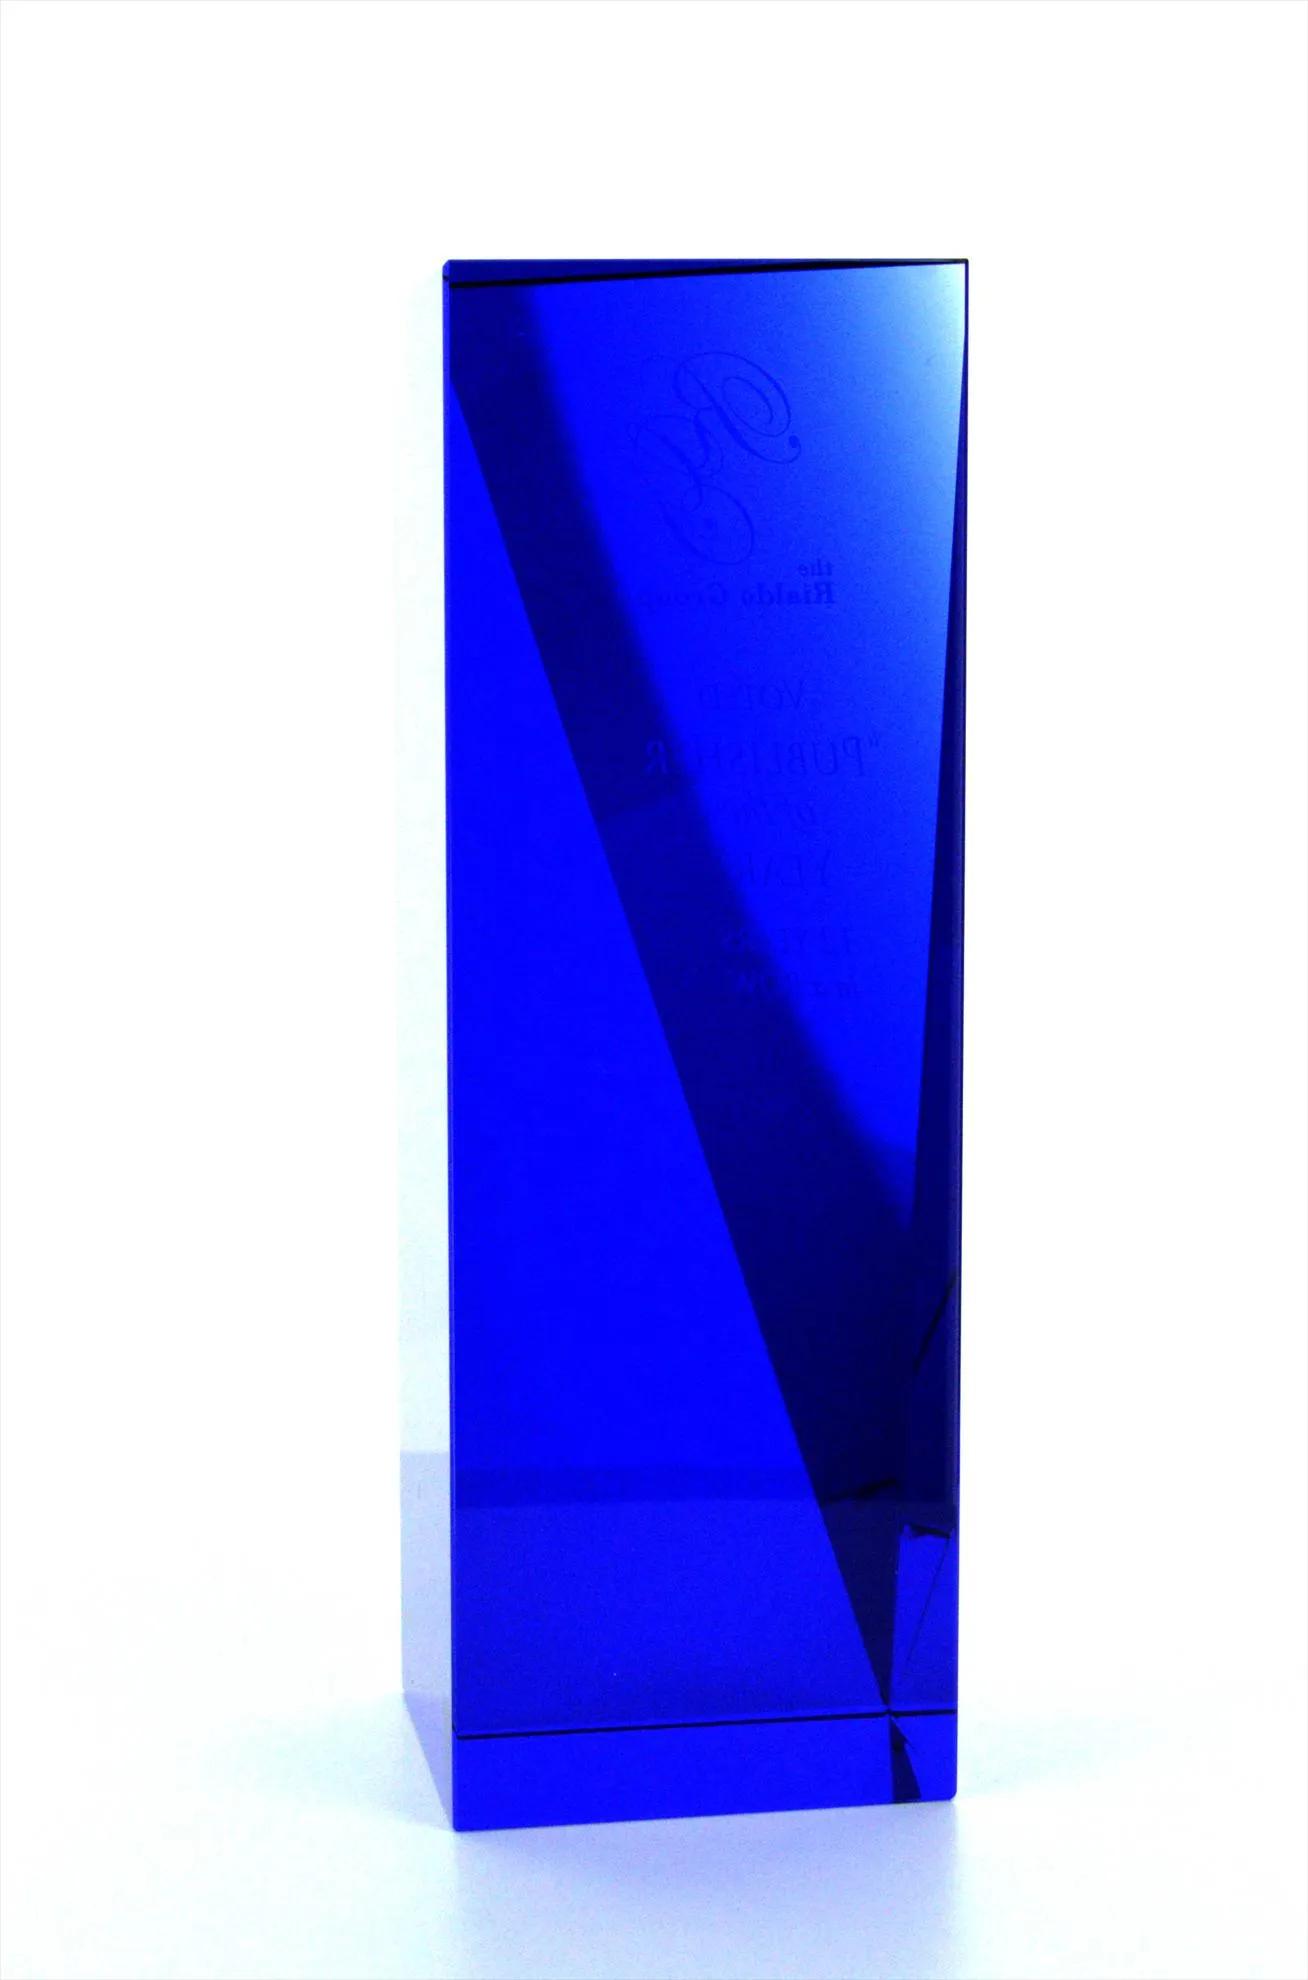 Atria Award - Medium 23 of 49